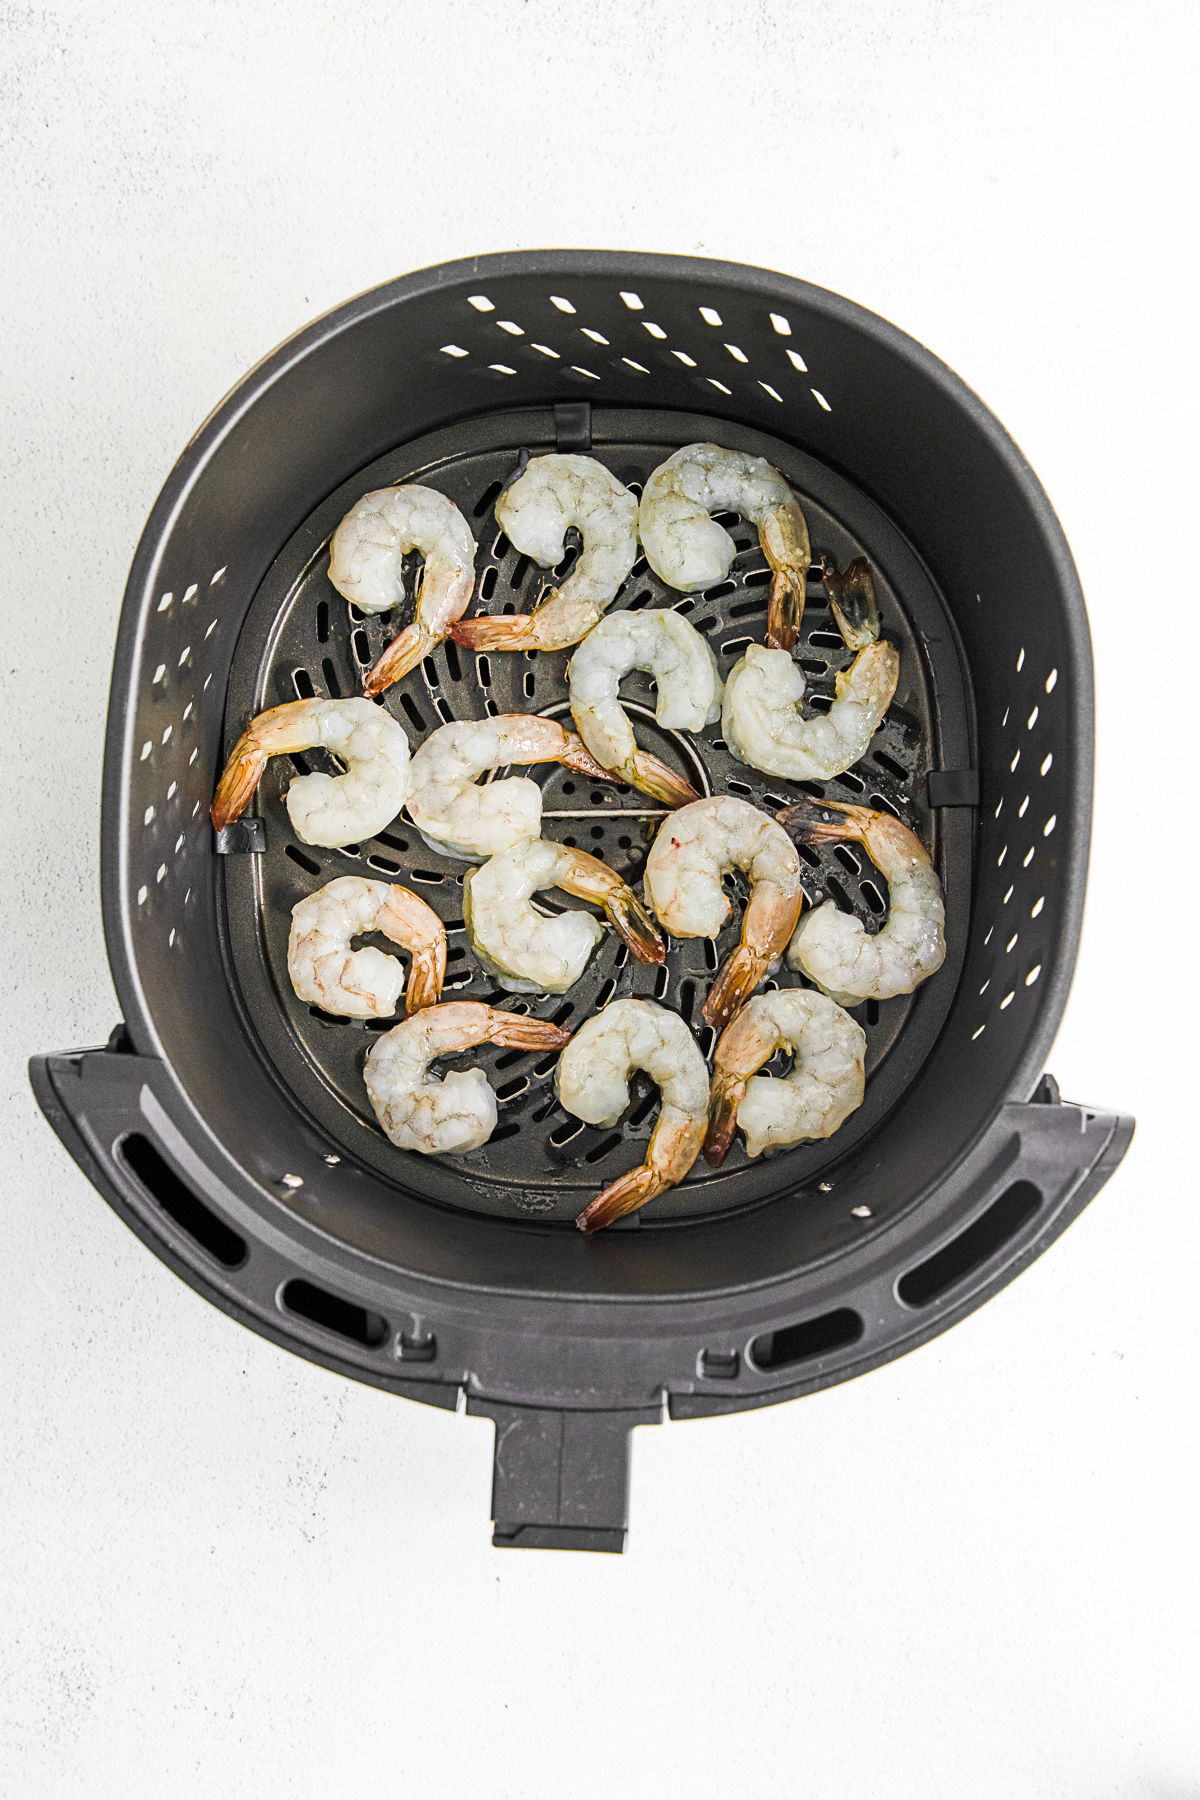 Uncooked shrimp in an air fryer basket. 